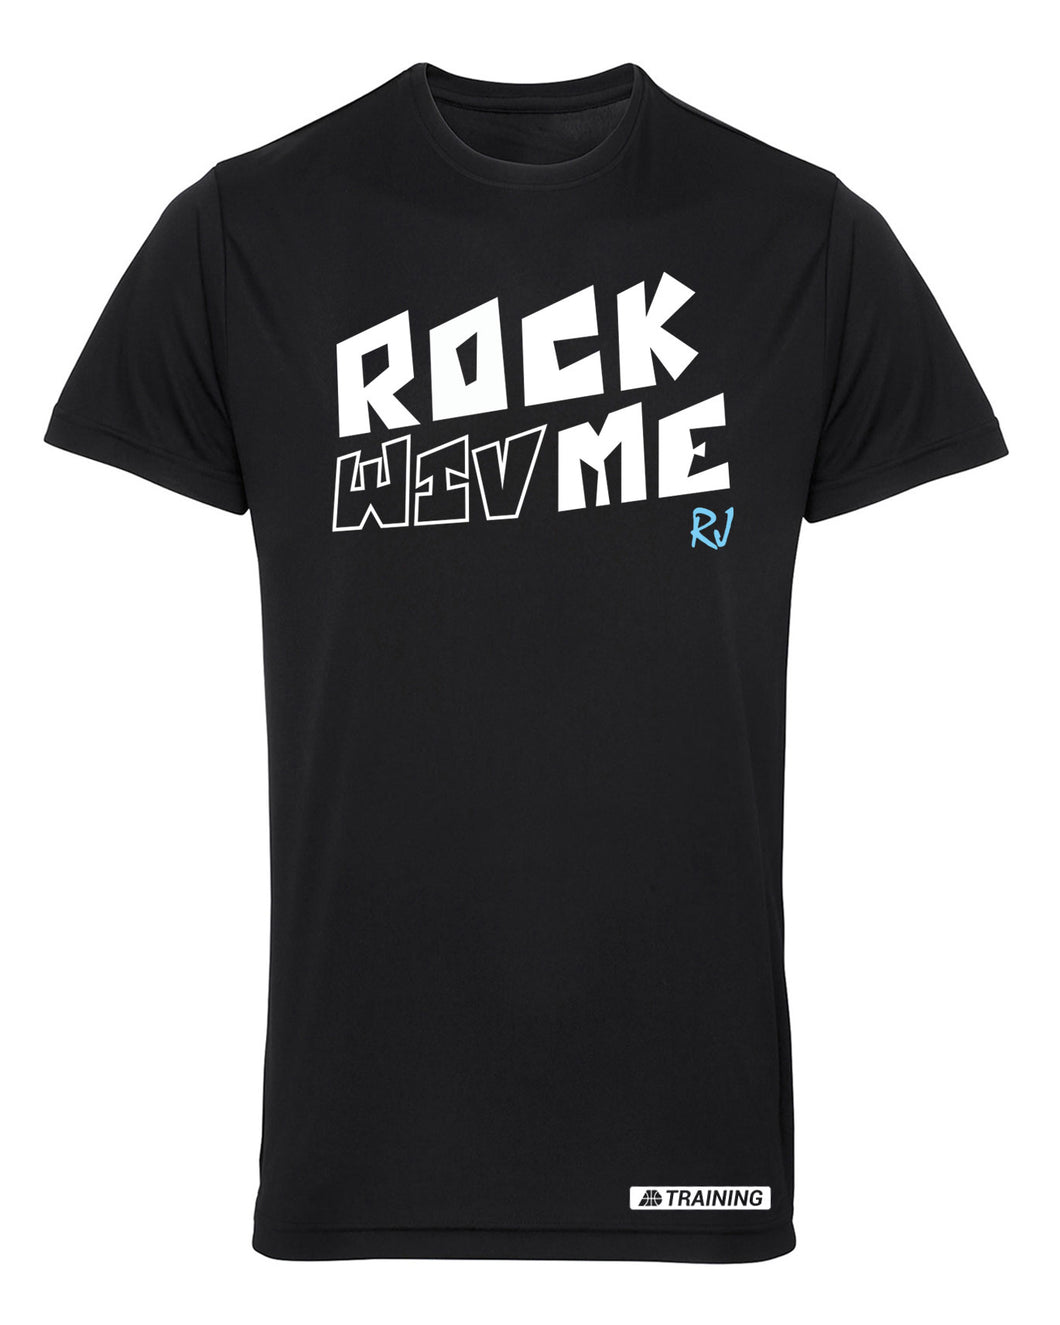 RockWivMe Performance T-Shirt